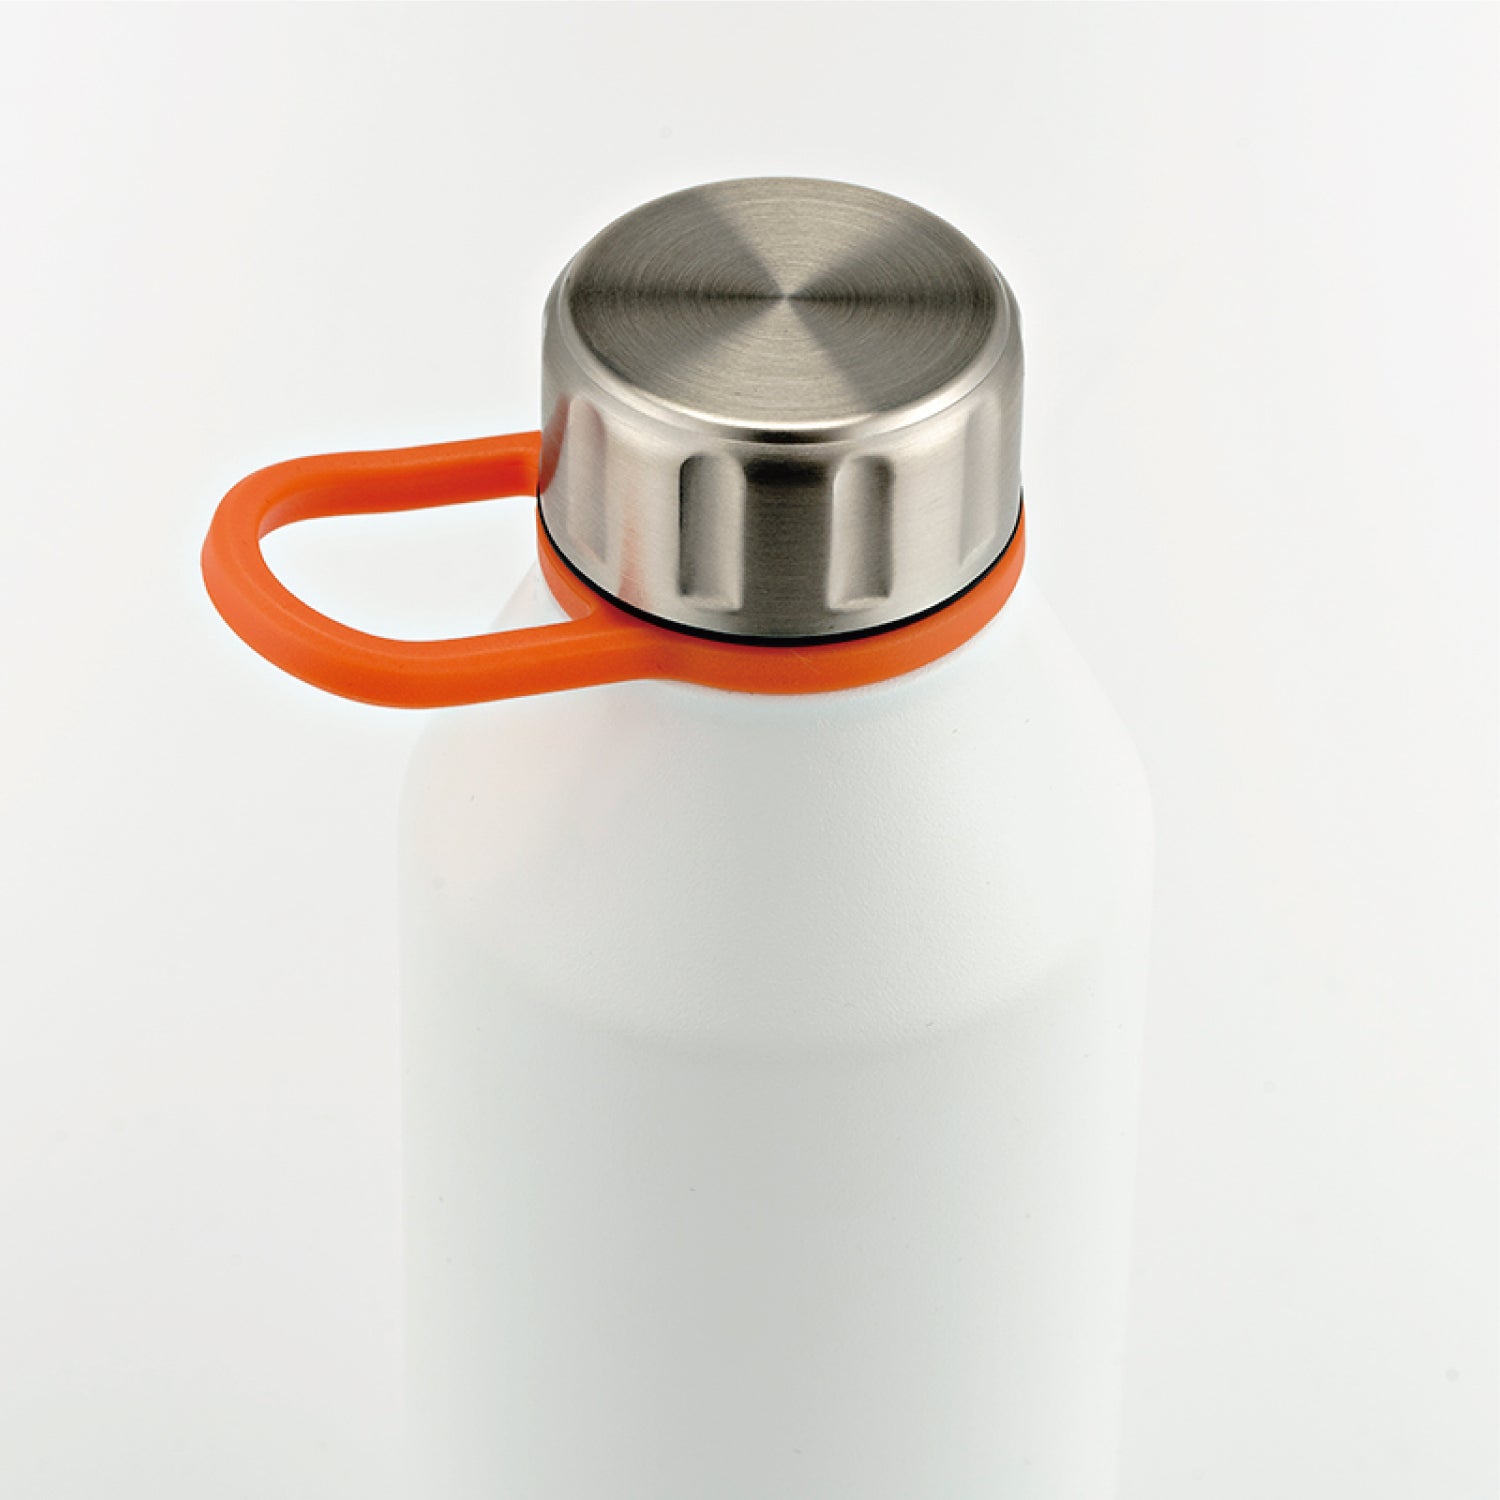 SANTECO Kola Beverage Bottle, 12 oz, Stainless Steel, Vacuum Insulated